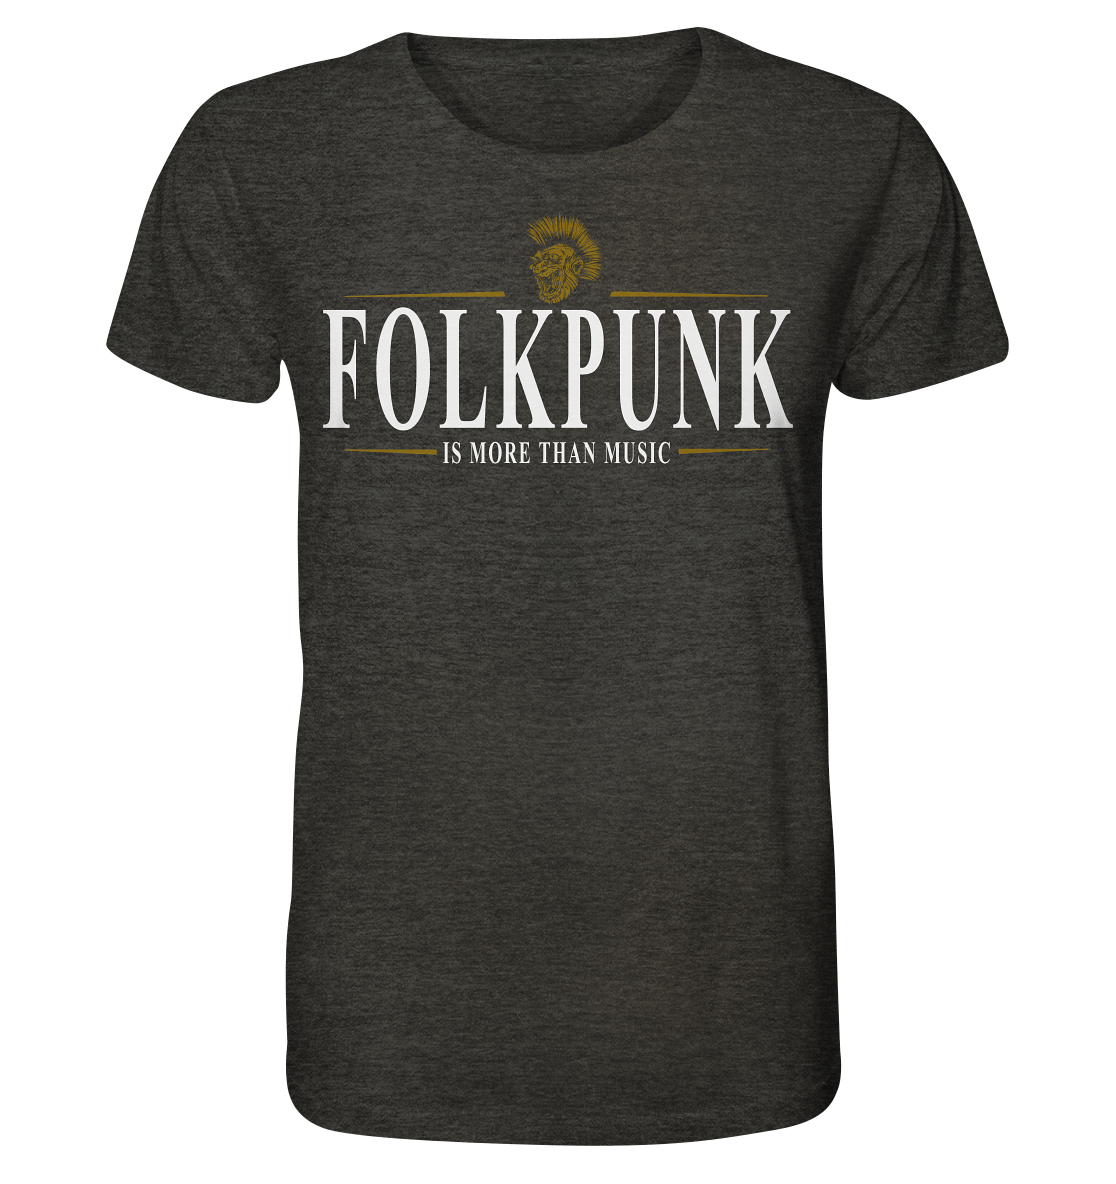 Folkpunk "Is More Than Music" - Organic Shirt (meliert)